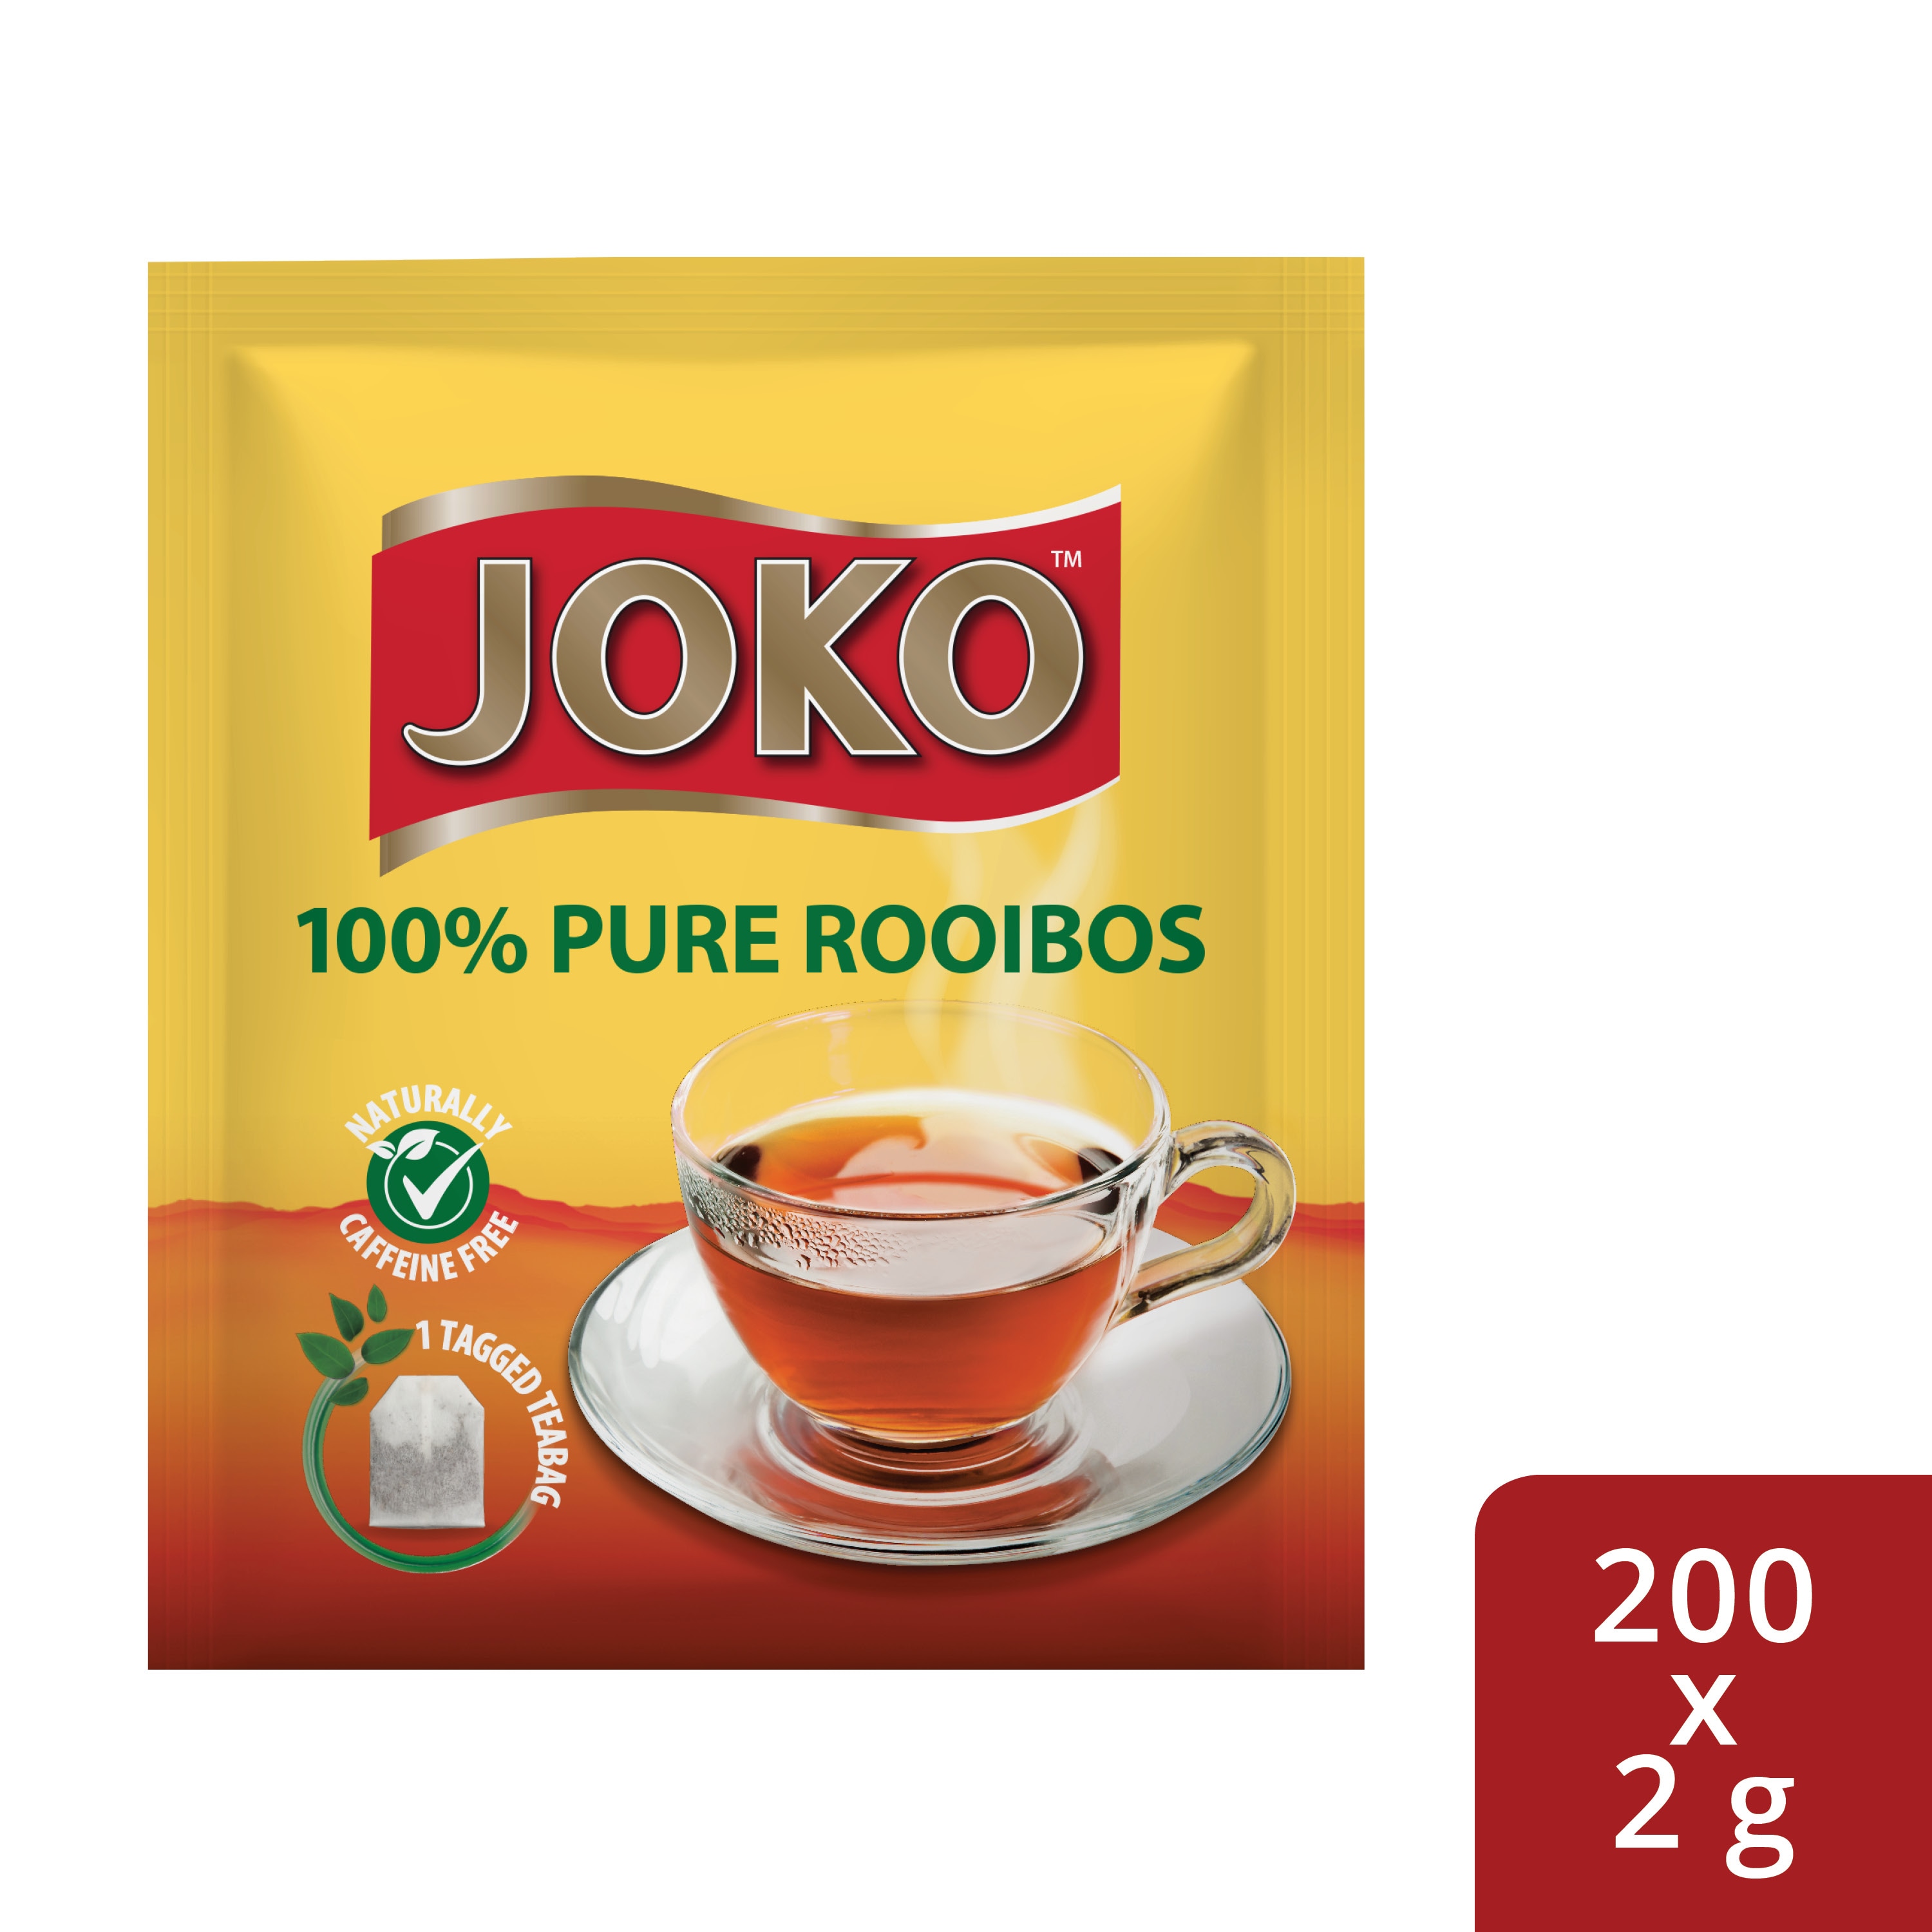 JOKO 100% Pure Rooibos 200 x 2 g Envelopes